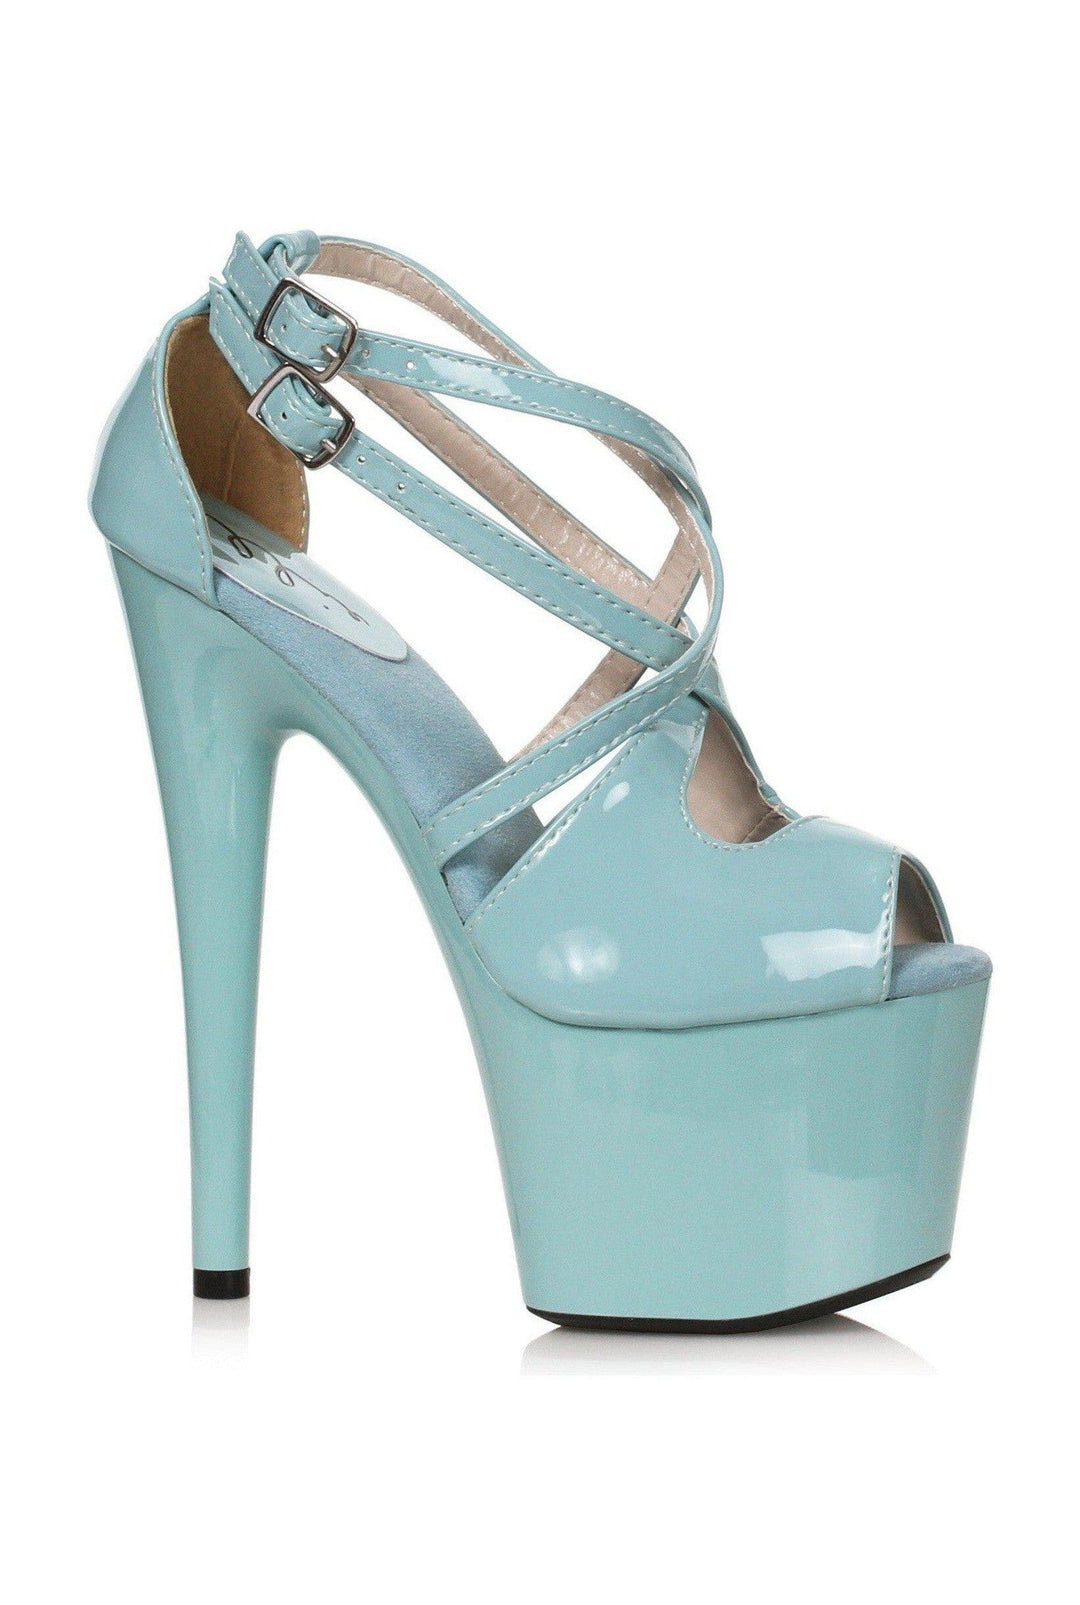 Ellie Shoes Green Sandals Platform Stripper Shoes | Buy at Sexyshoes.com